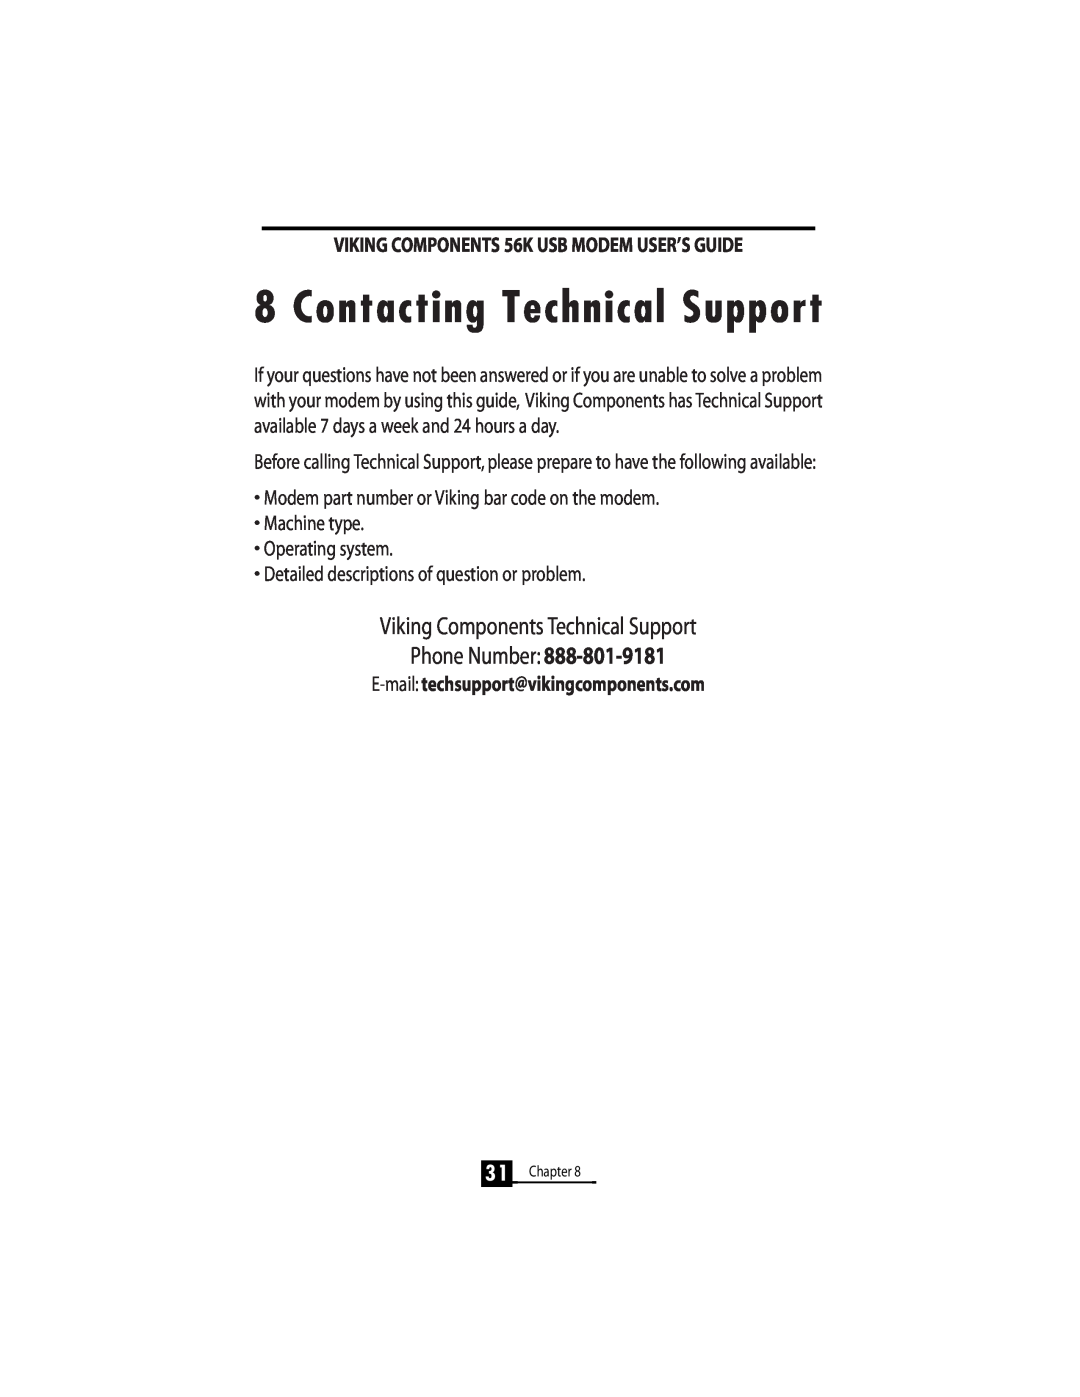 Viking InterWorks 56K manual Contacting Technical Support, Viking Components Technical Support Phone Number 